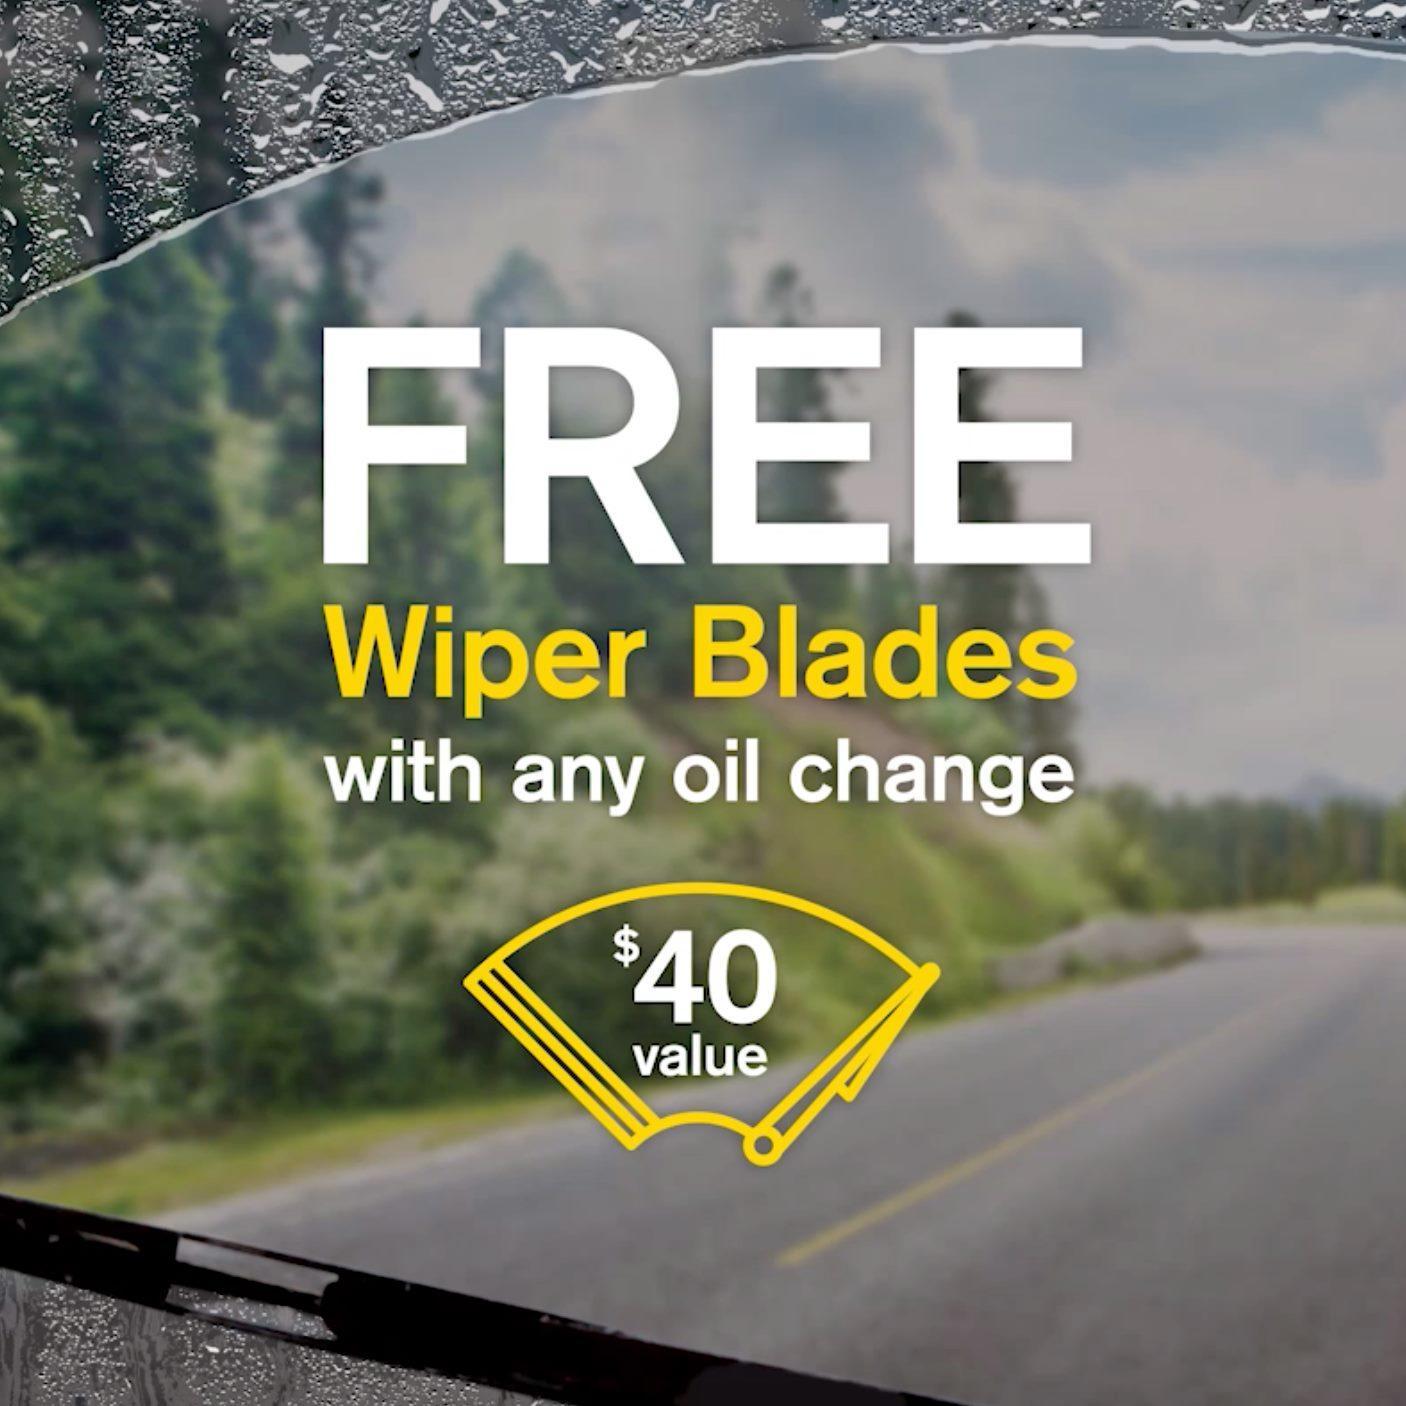 mr lube free wiper blades